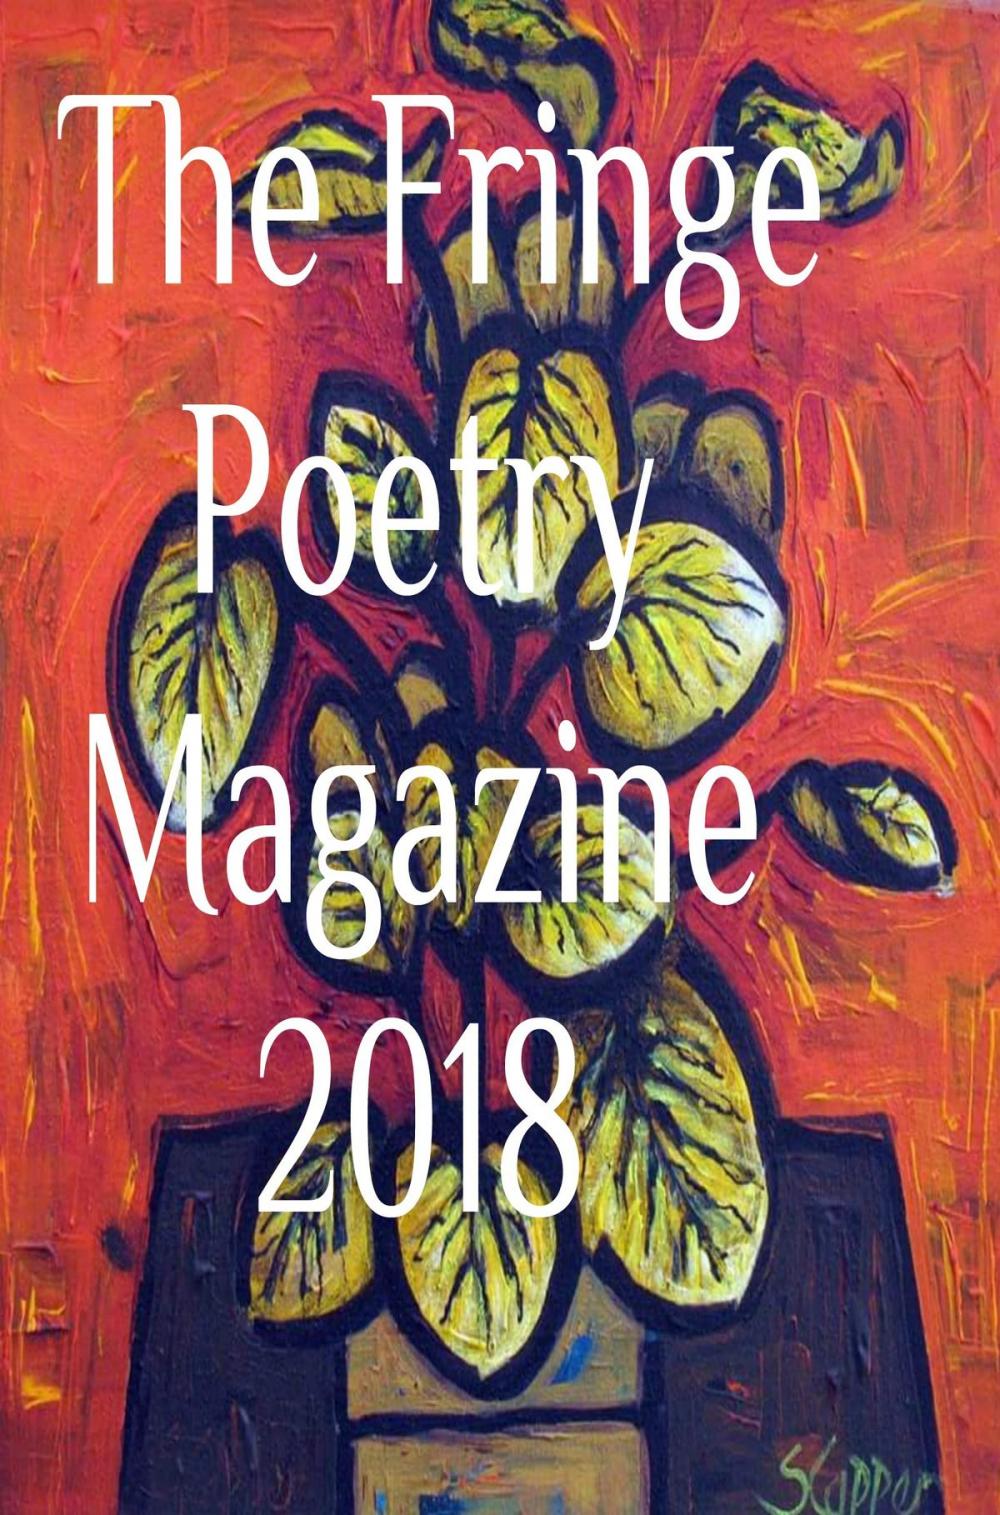 Big bigCover of The Fringe Poetry Magazine 2018